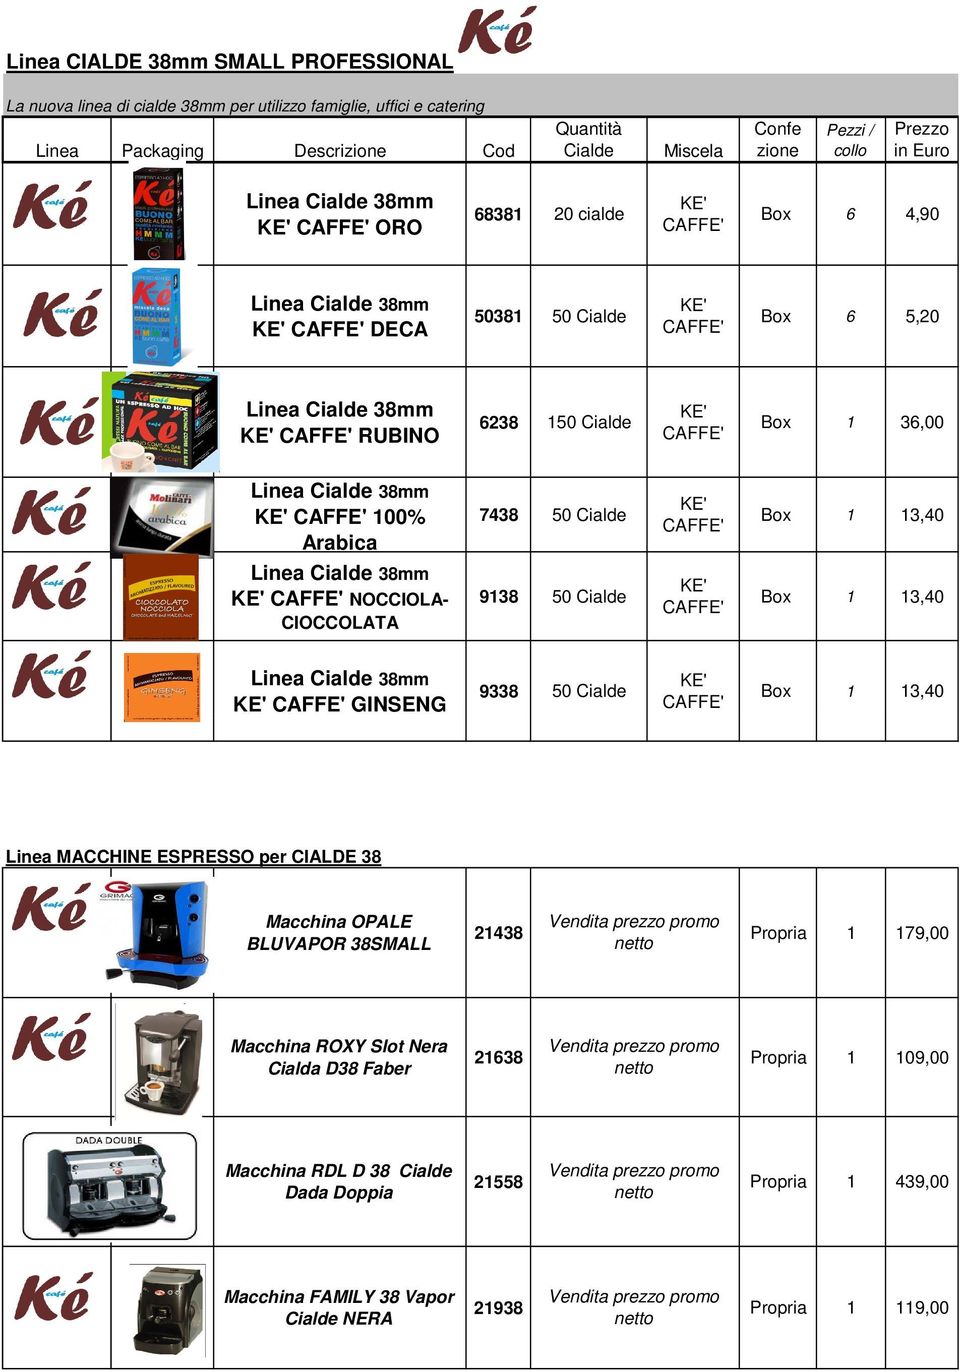 50 Cialde KE' CAFFE' Box 1 13,40 Linea Cialde 38mm KE' CAFFE' NOCCIOLA- CIOCCOLATA 9138 50 Cialde KE' CAFFE' Box 1 13,40 Linea Cialde 38mm KE' CAFFE' GINSENG 9338 50 Cialde KE' CAFFE' Box 1 13,40